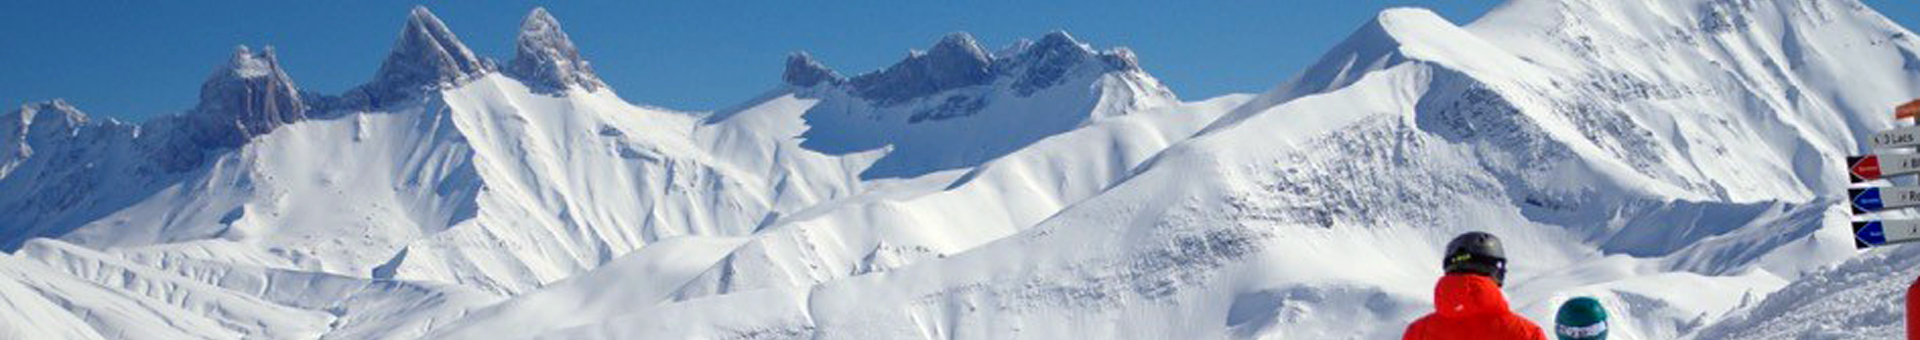 Ski > Domaine skiable des Sybelles > tetiere